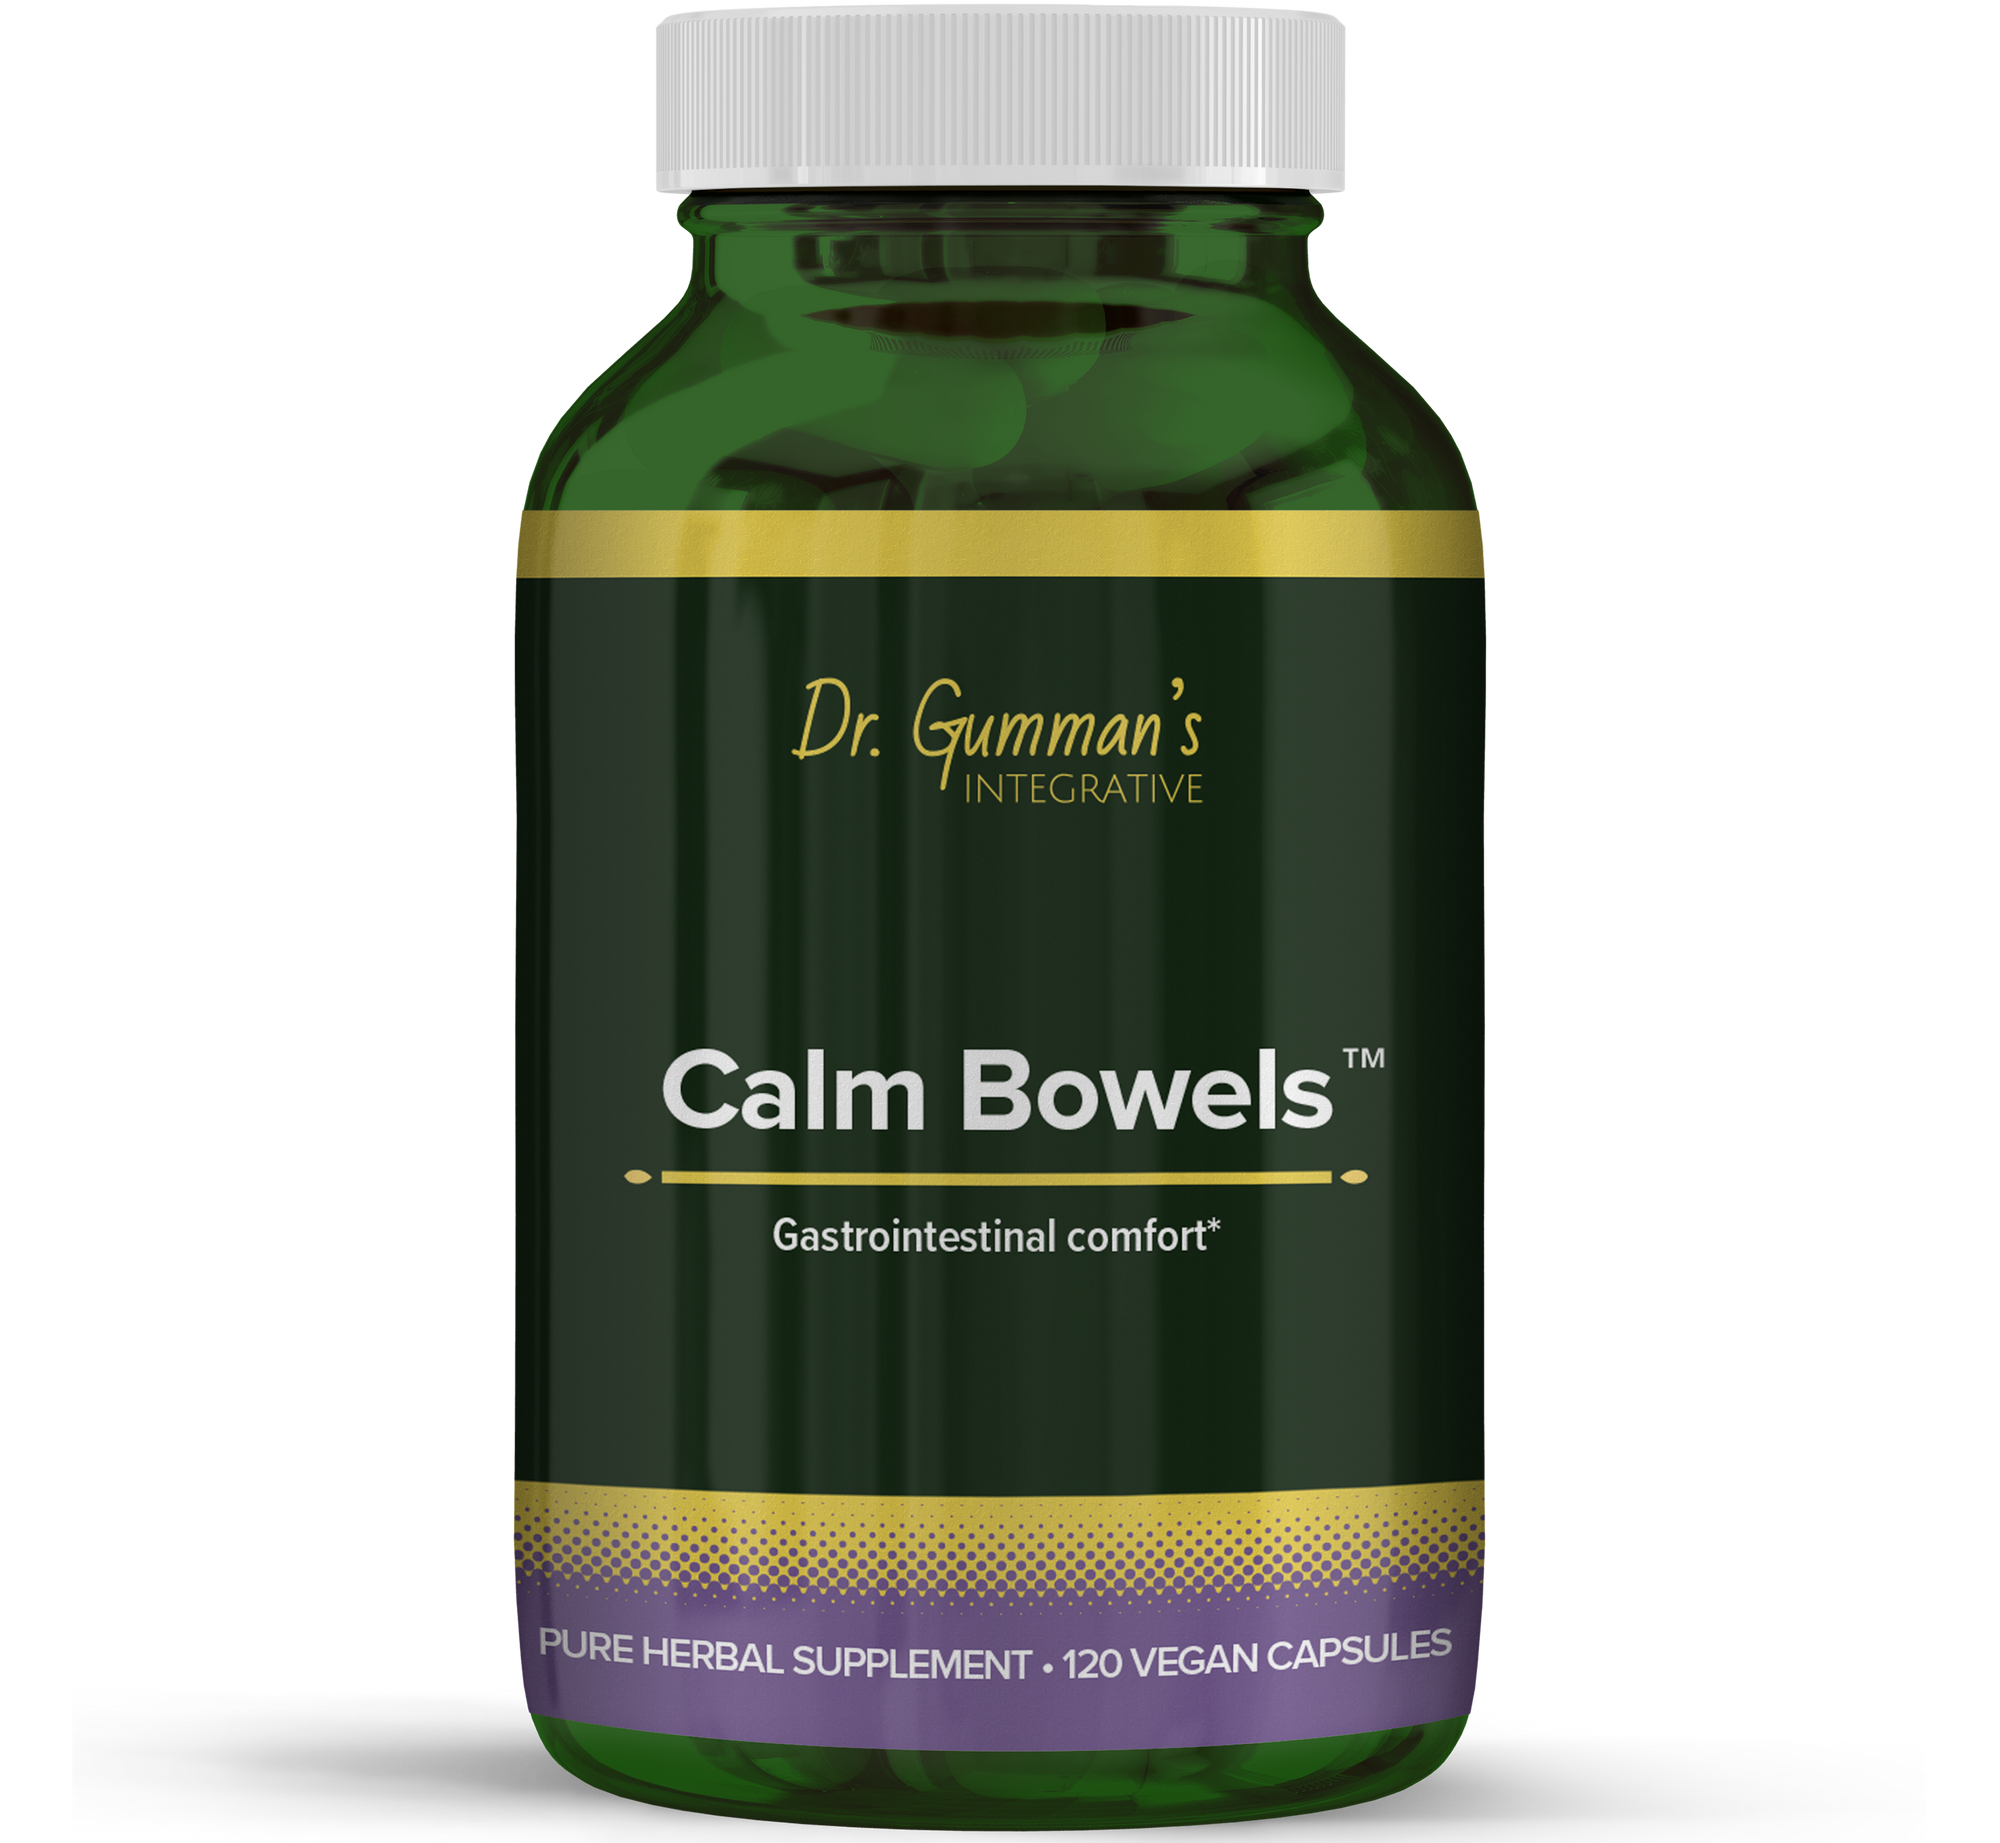 Calm Bowels (Gastrointestinal Comfort)